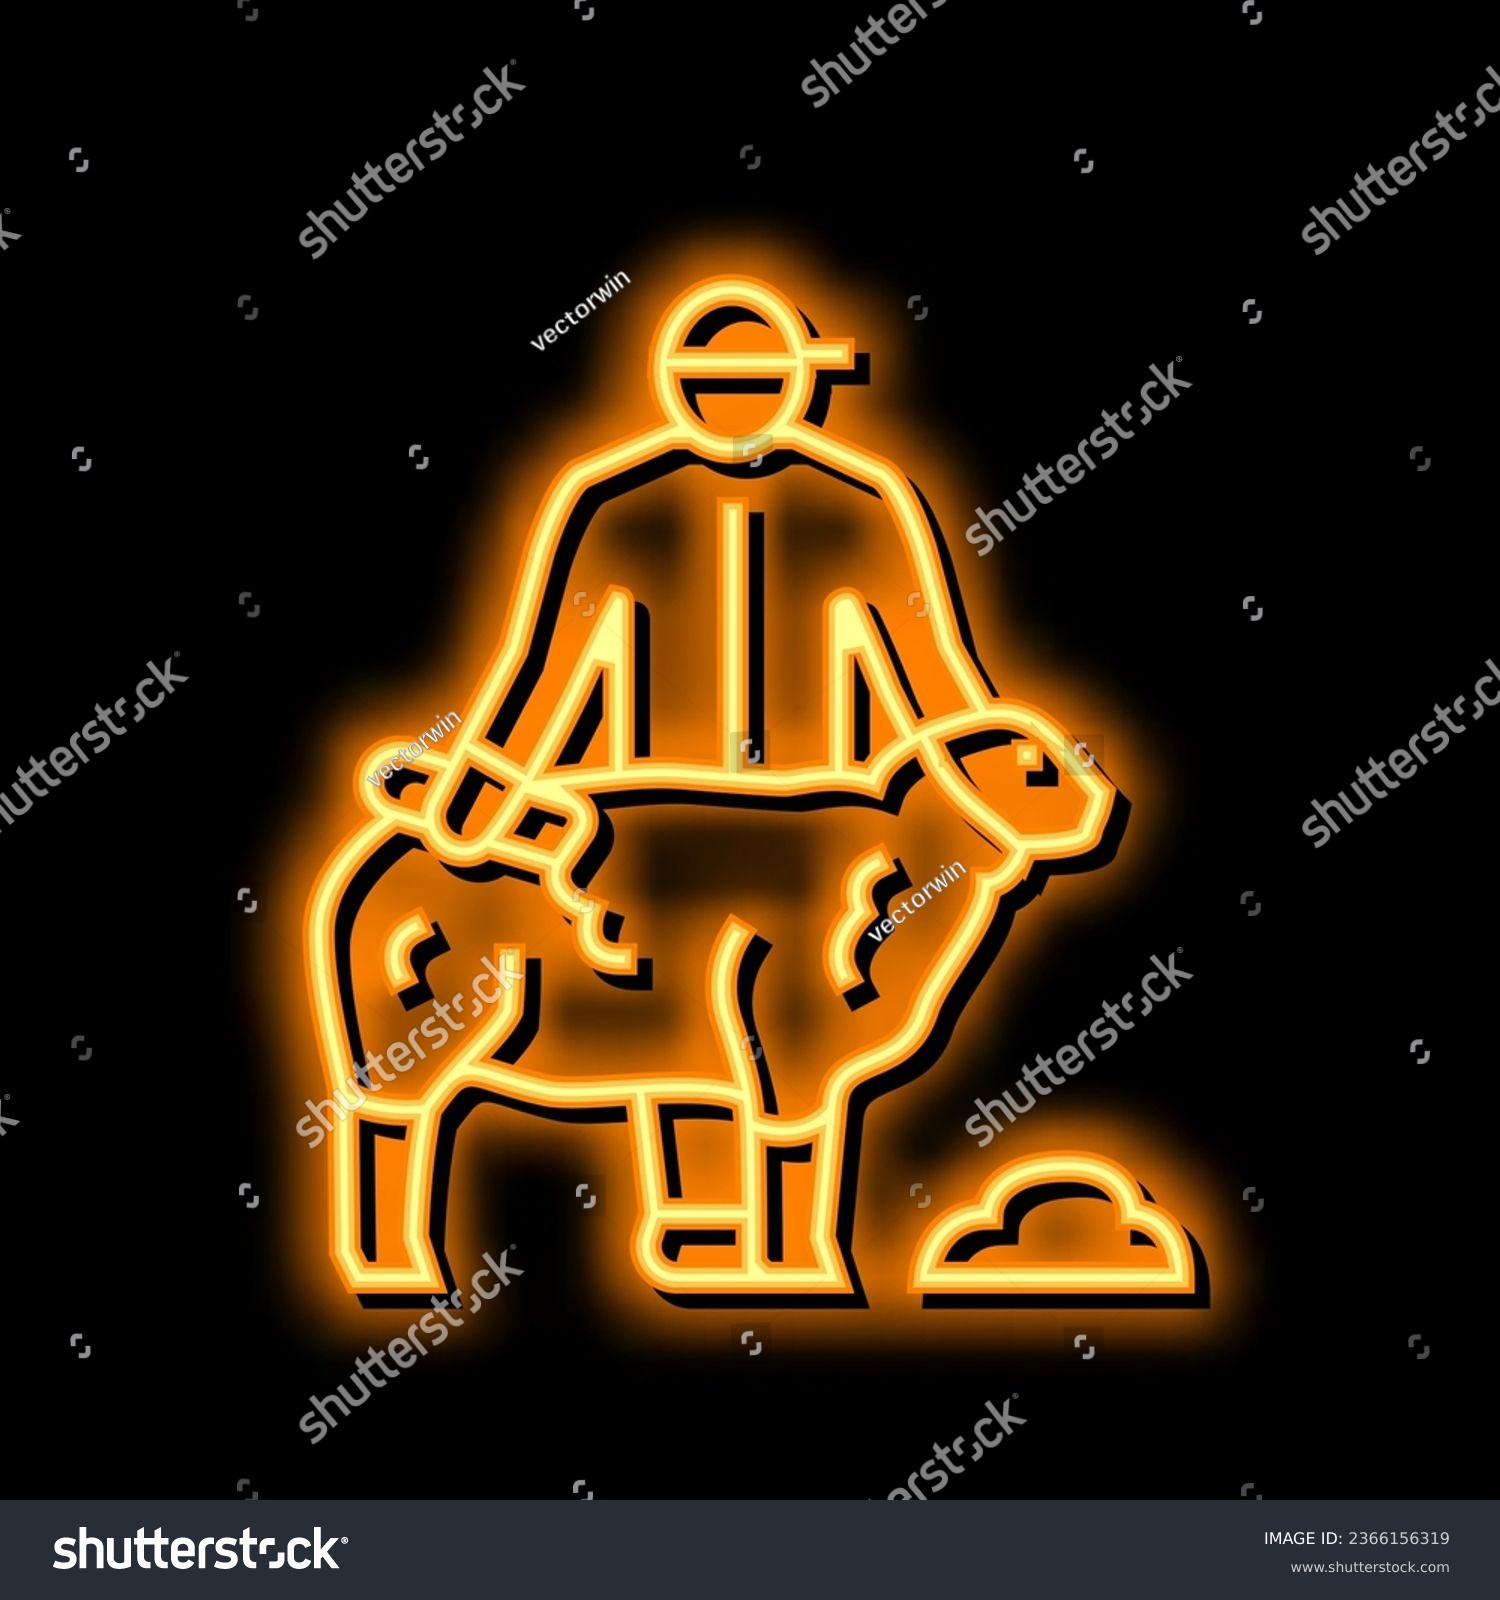 SVG of shear sheep neon light sign vector. shear sheep illustration svg